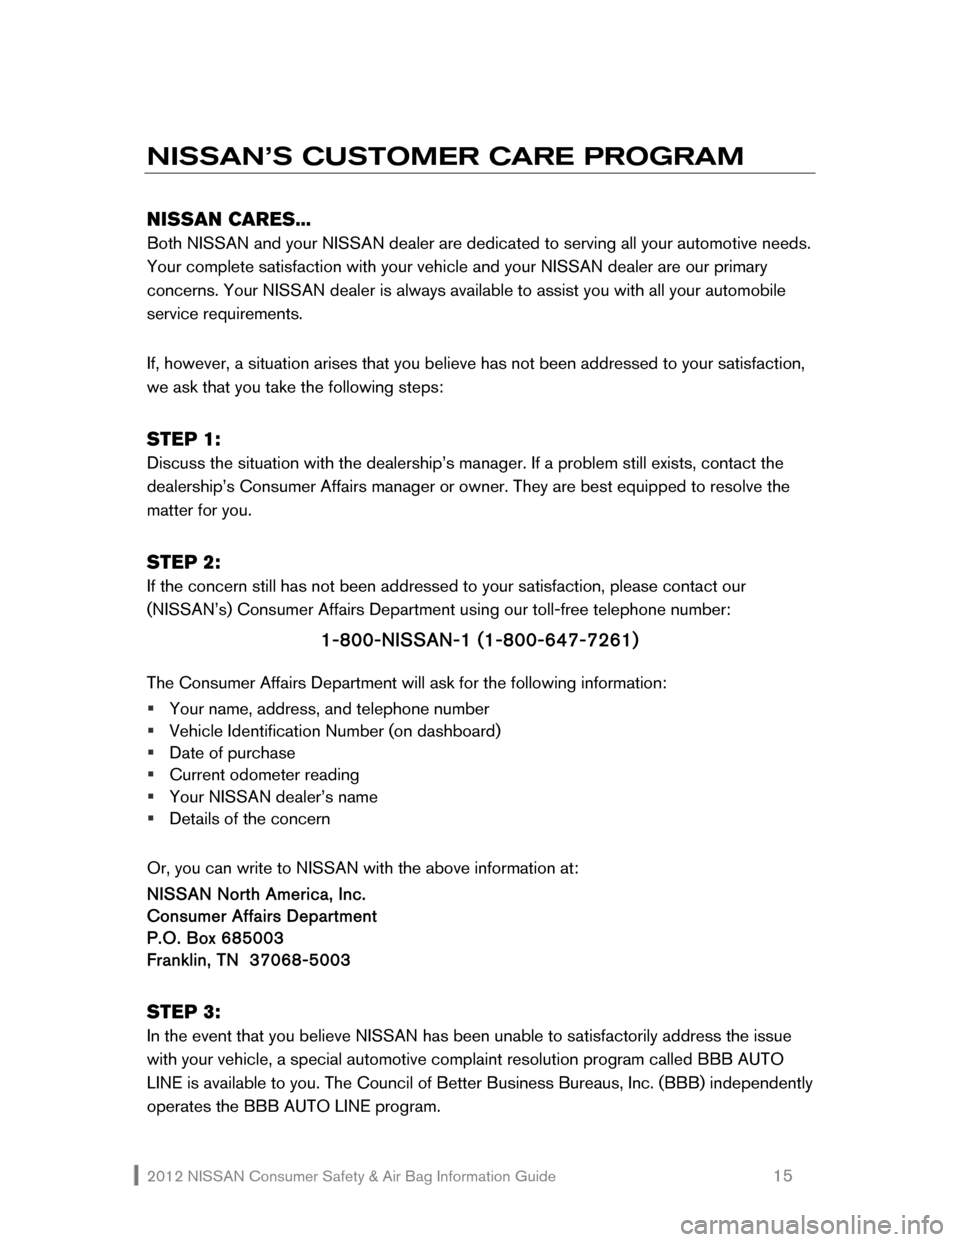 NISSAN MAXIMA 2012 A35 / 7.G Consumer Safety Air Bag Information Guide 2012 NISSAN Consumer Safety & Air Bag Information Guide                                                   15 
NISSAN’S CUSTOMER CARE PROGRAM 
 
NISSAN CARES... 
Both NISSAN and your NISSAN dealer ar